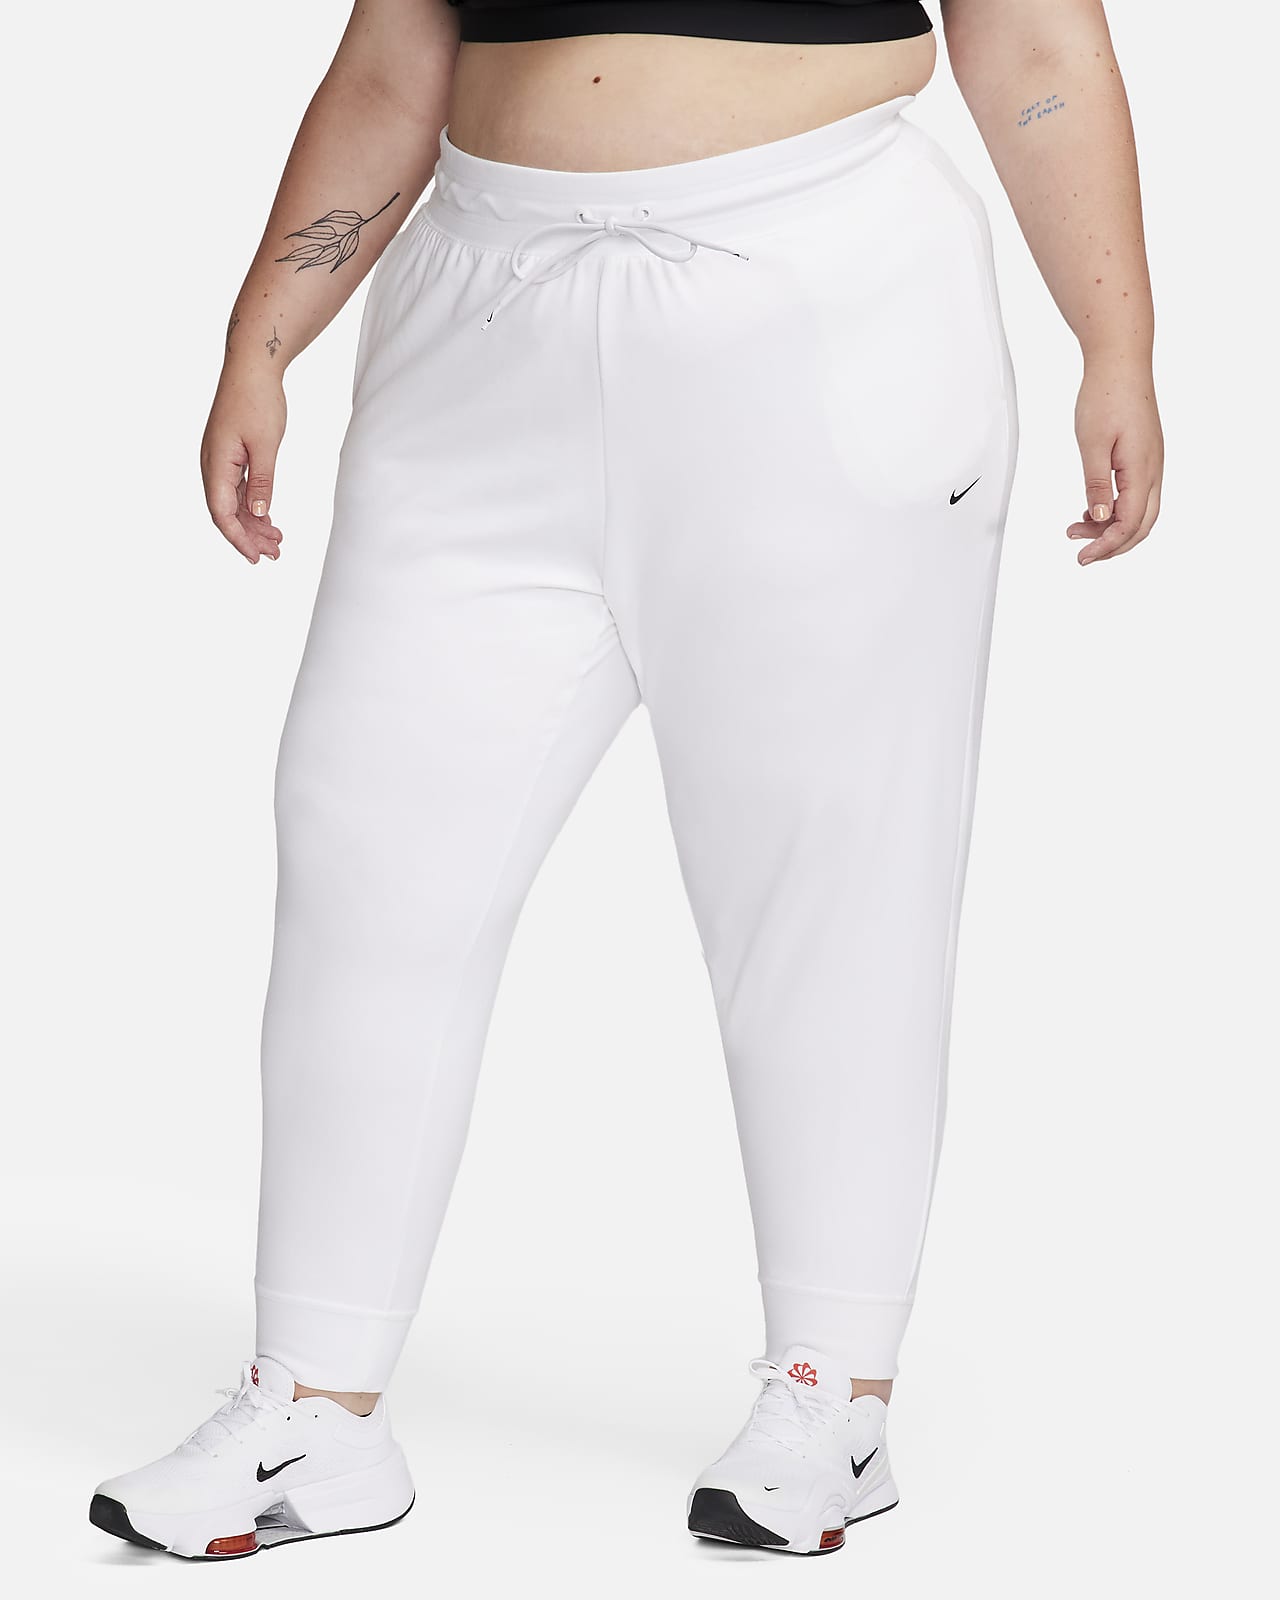 Joggers de French Terry de cintura alta de 7/8 para mujer (talla grande) Nike Dri-FIT One